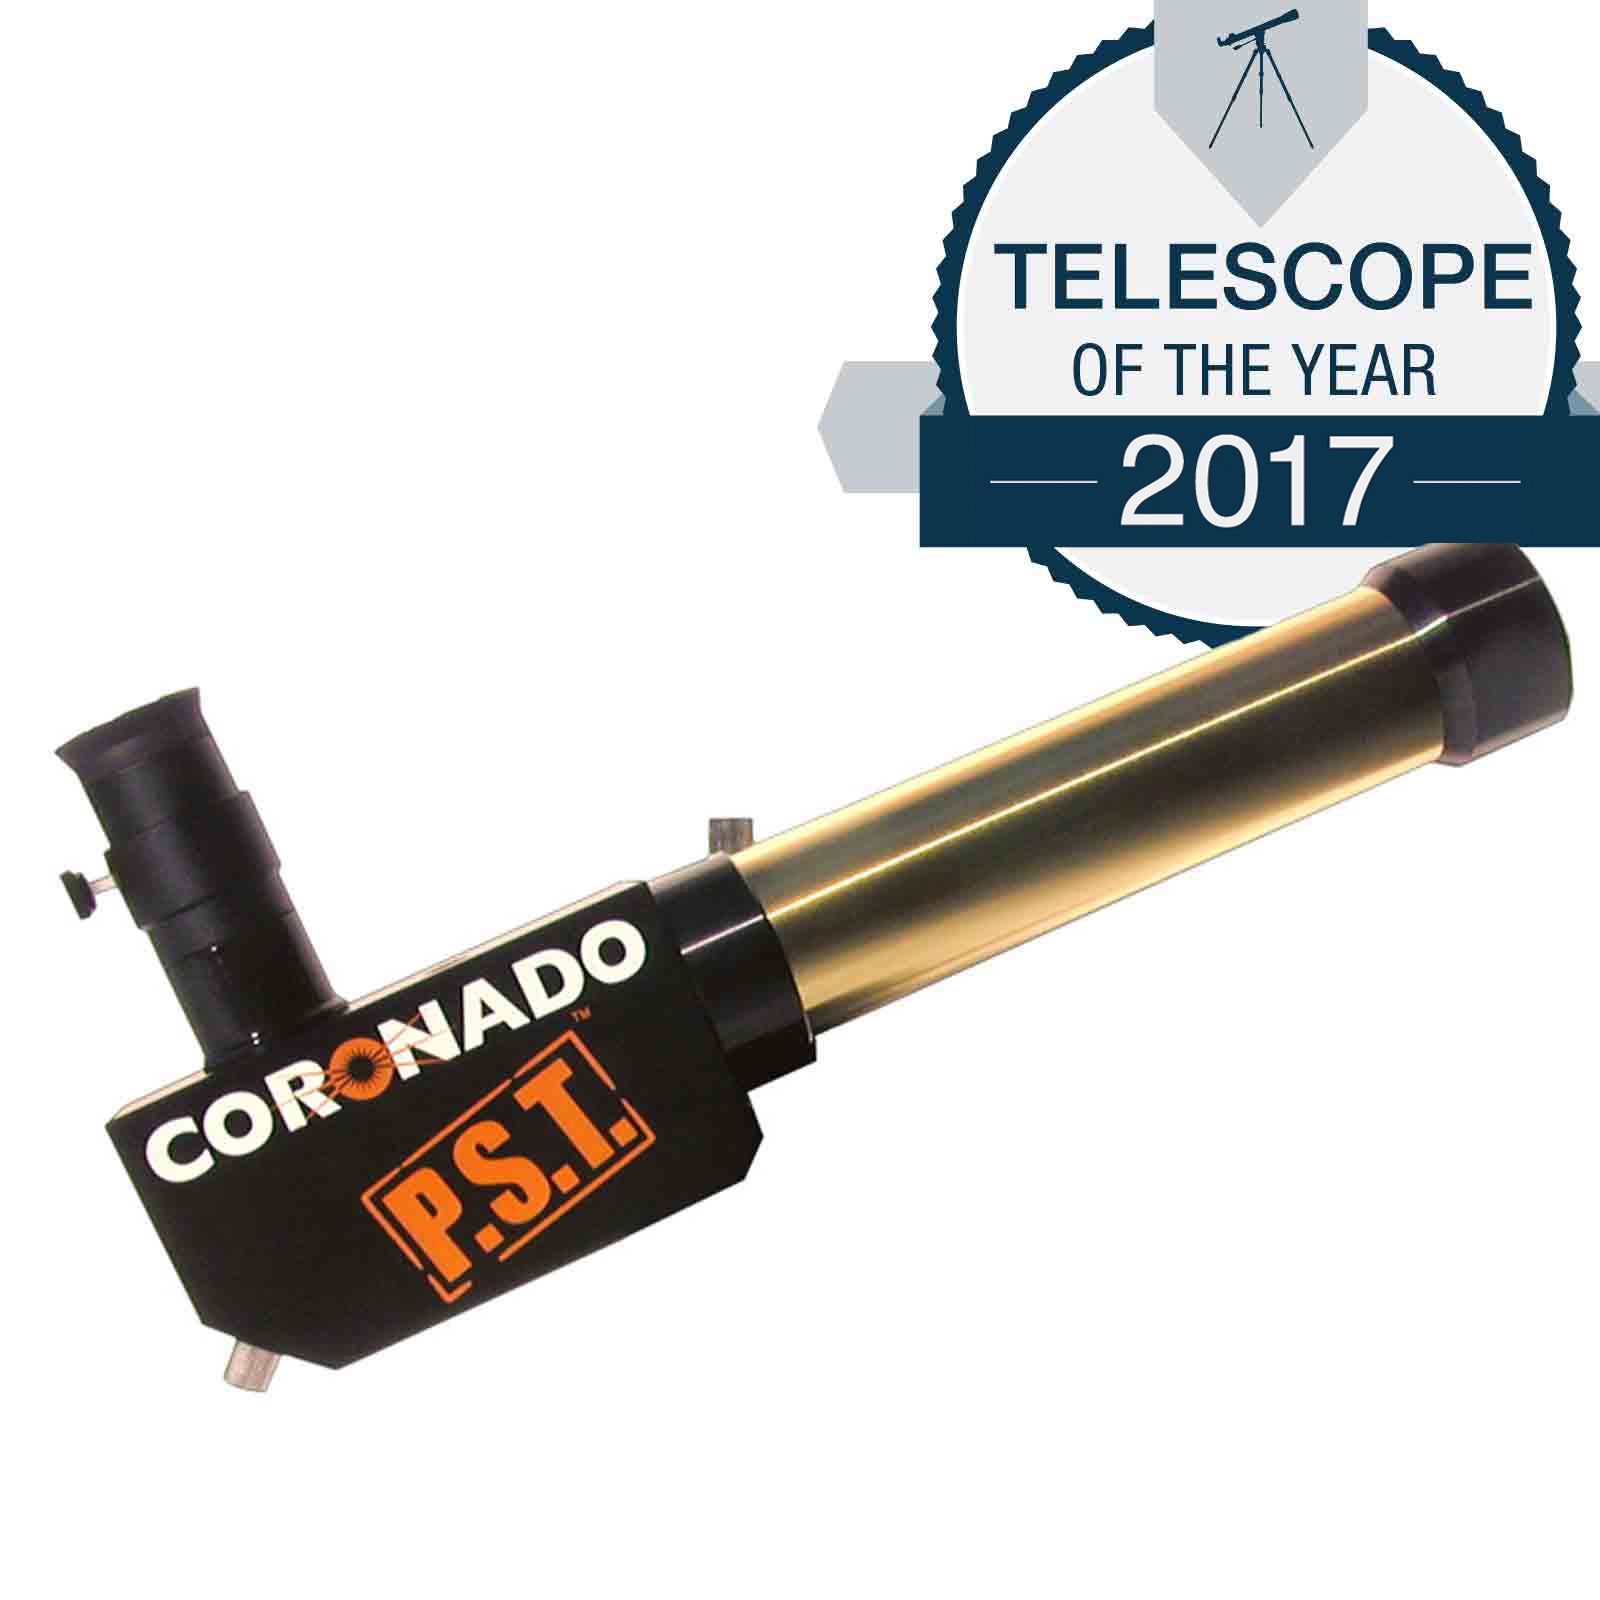 coronado telescope